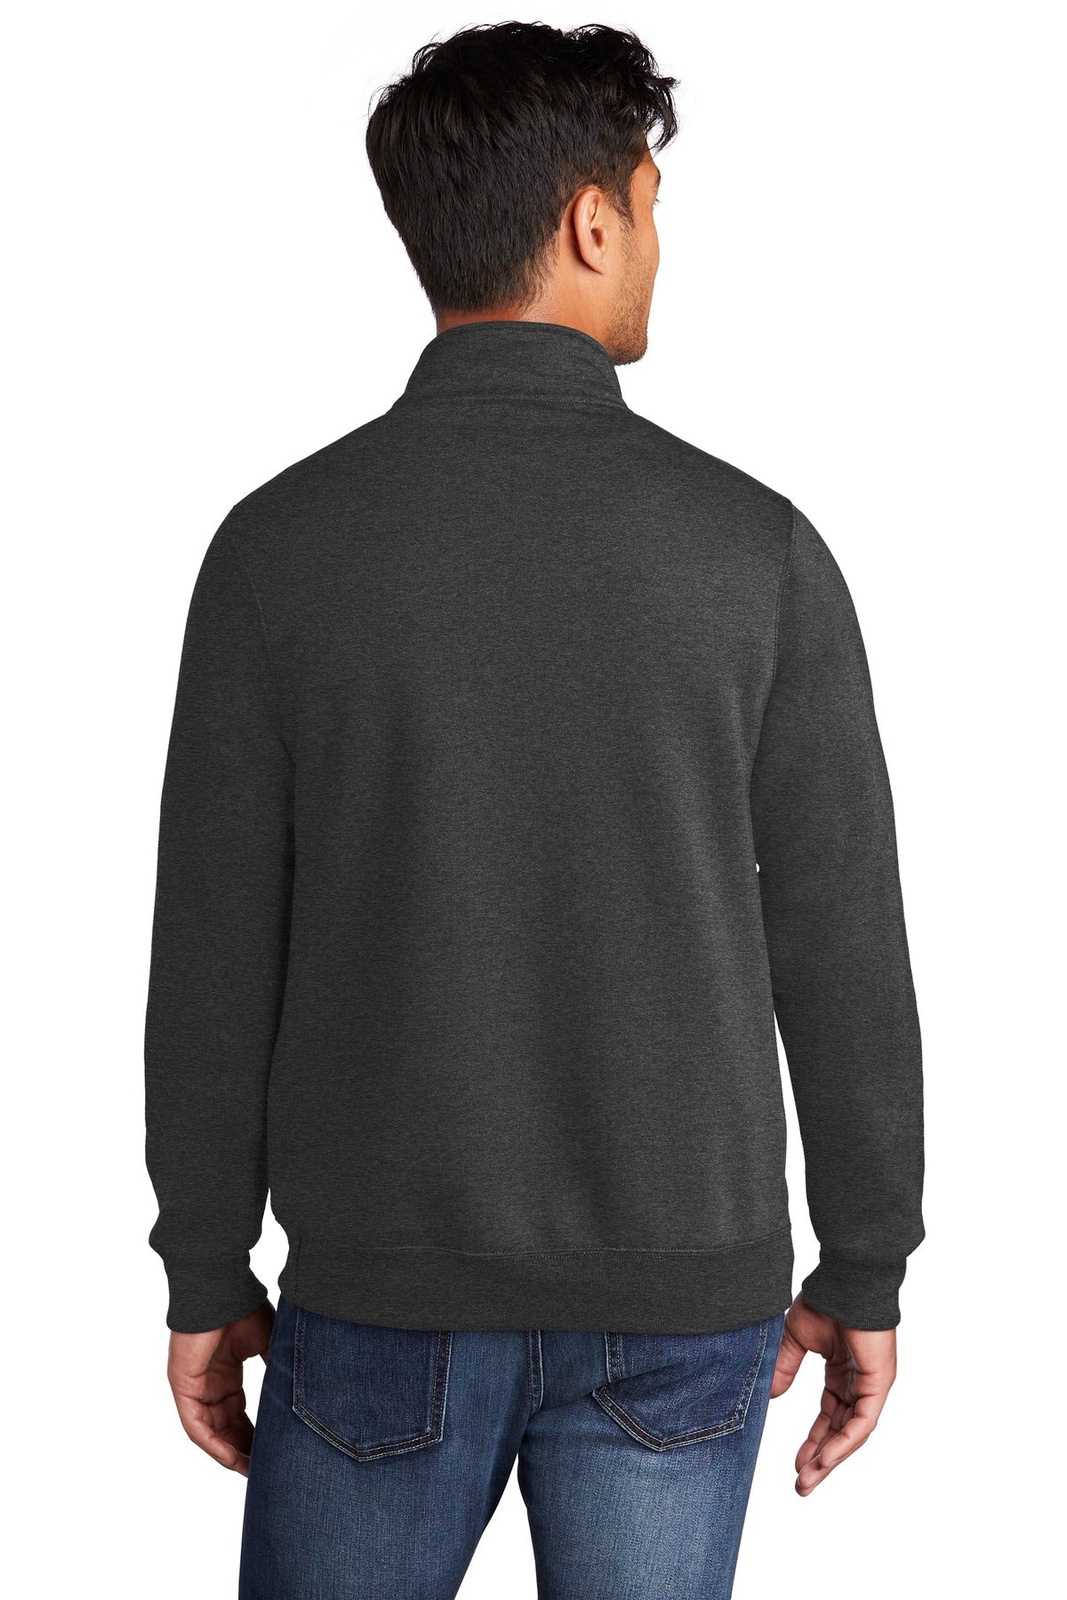 Port & Company PC78Q Core Fleece 1/4-Zip Pullover Sweatshirt PC78QDark Heather Gray - HIT a Double - 1